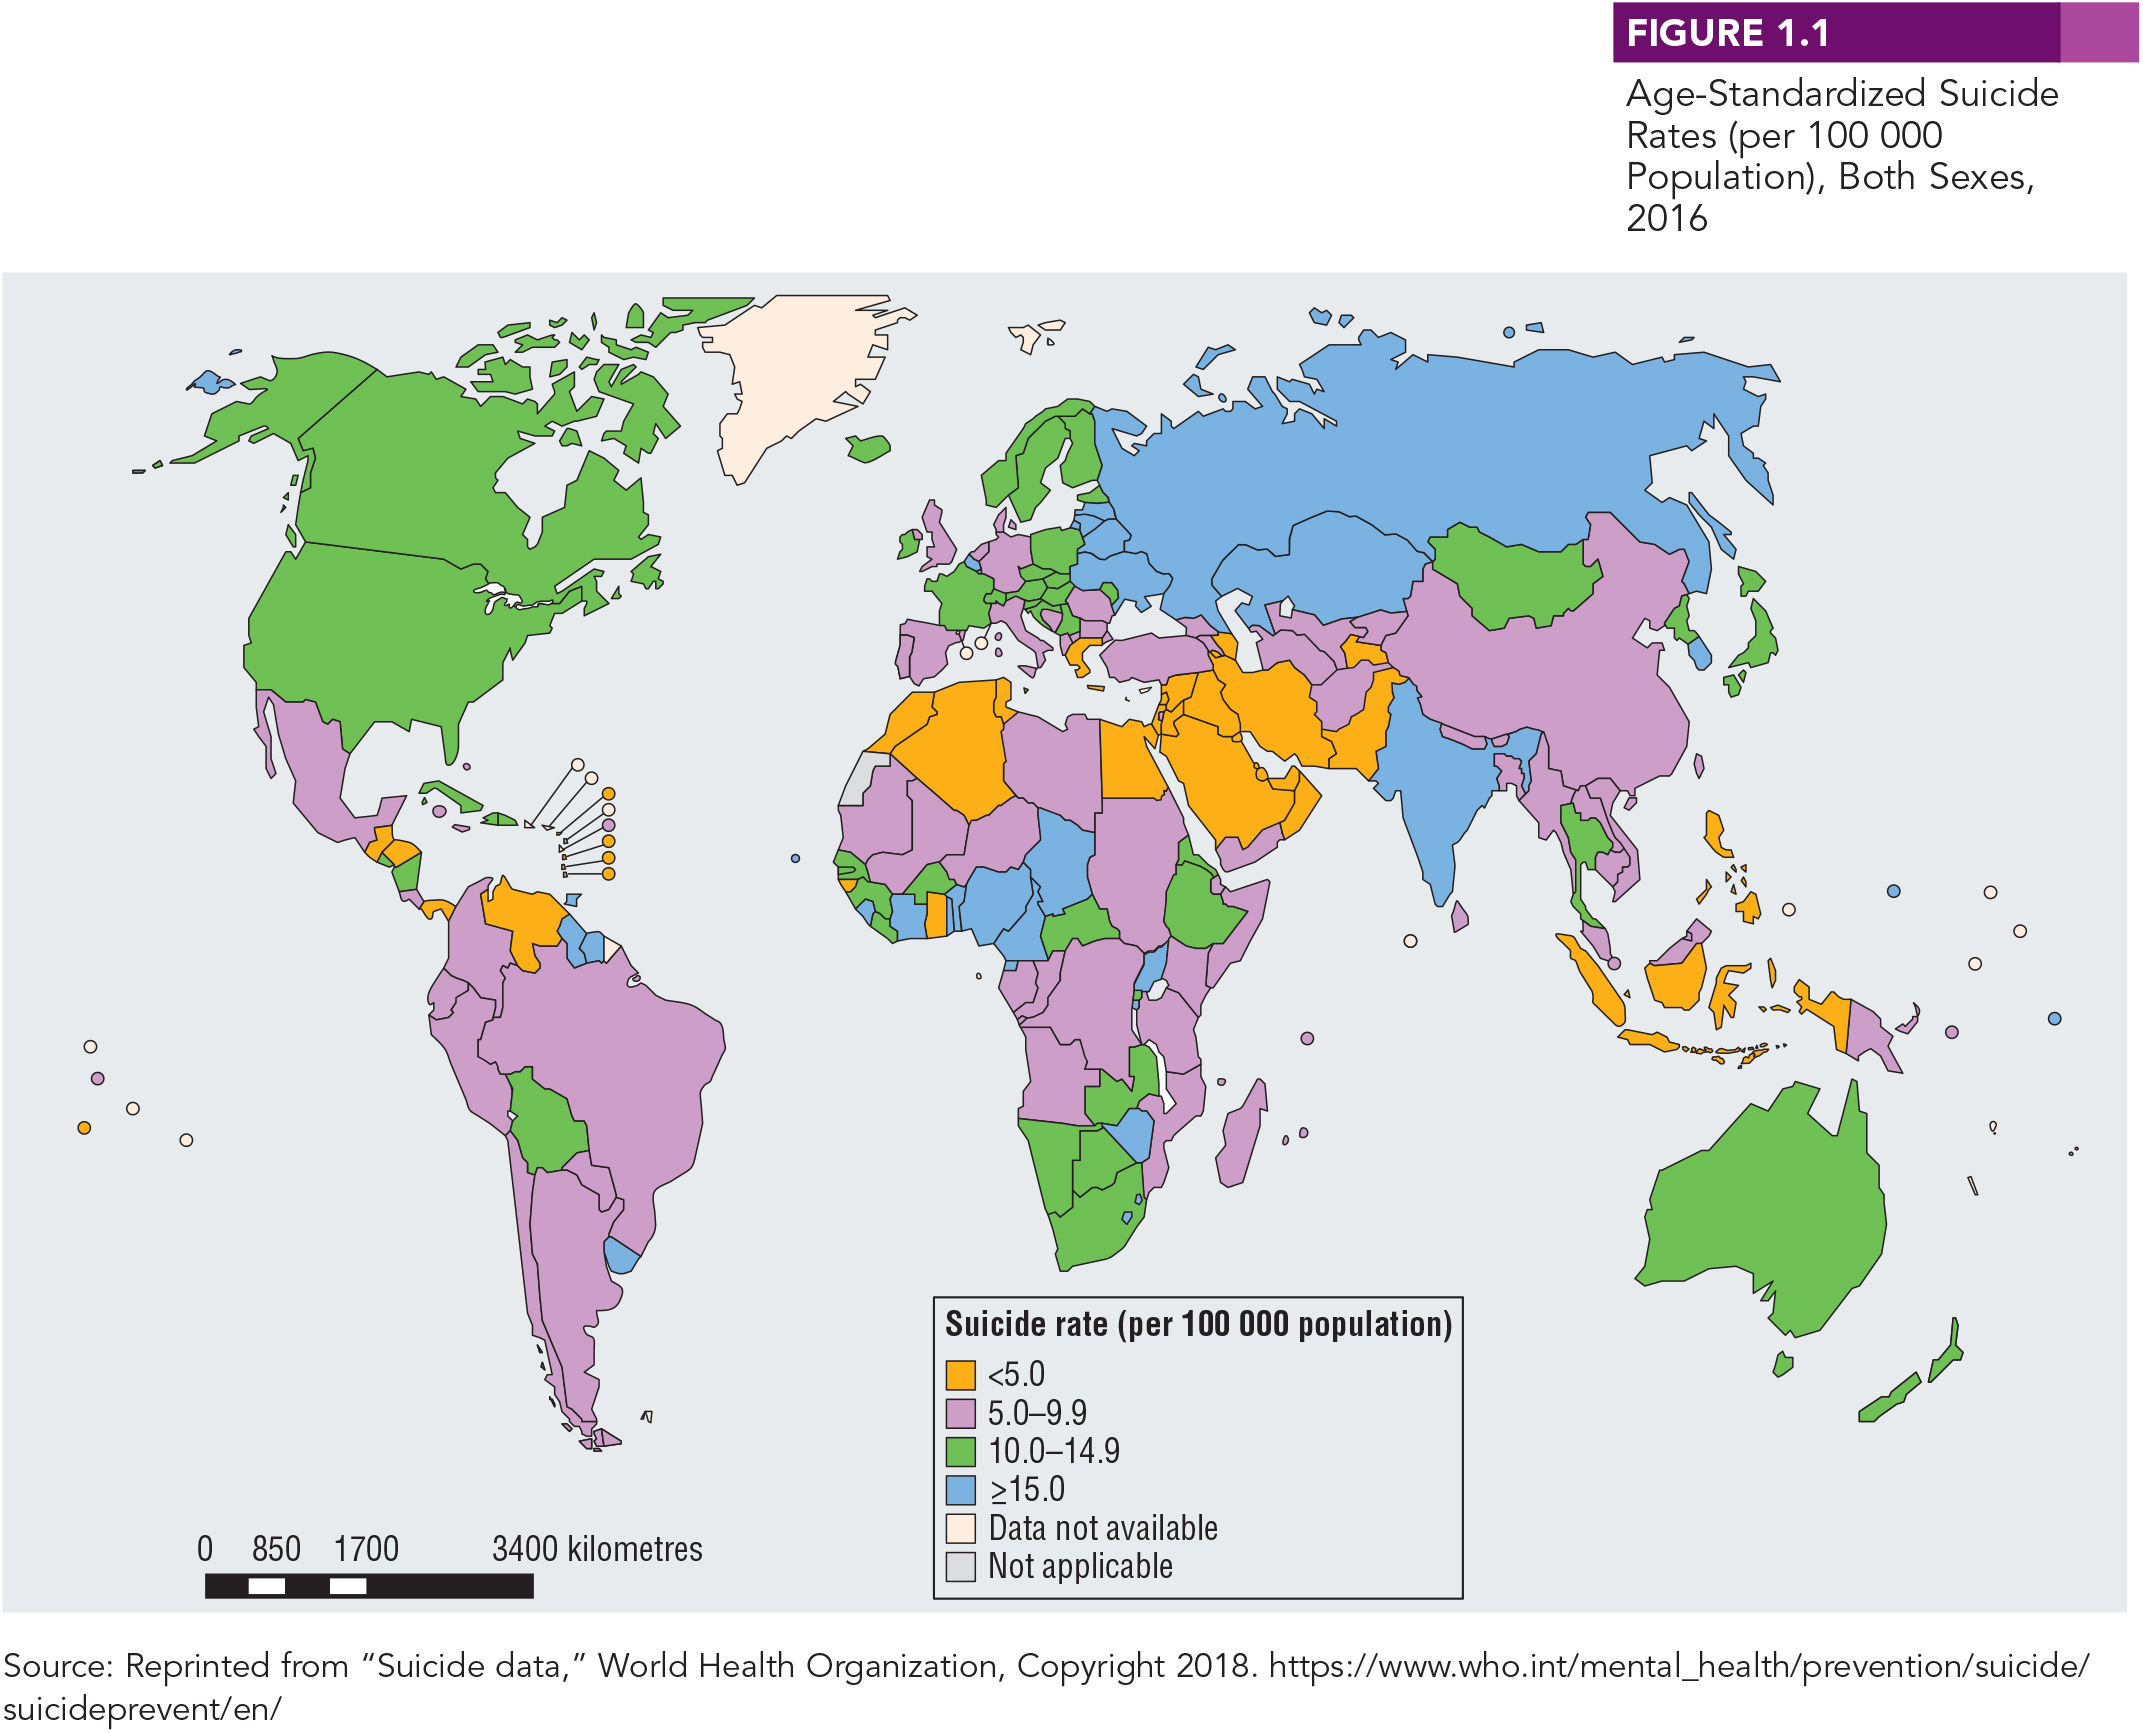 Age-Standardized Suicide Rates (per 100 000 Population), Both Sexes, 2016